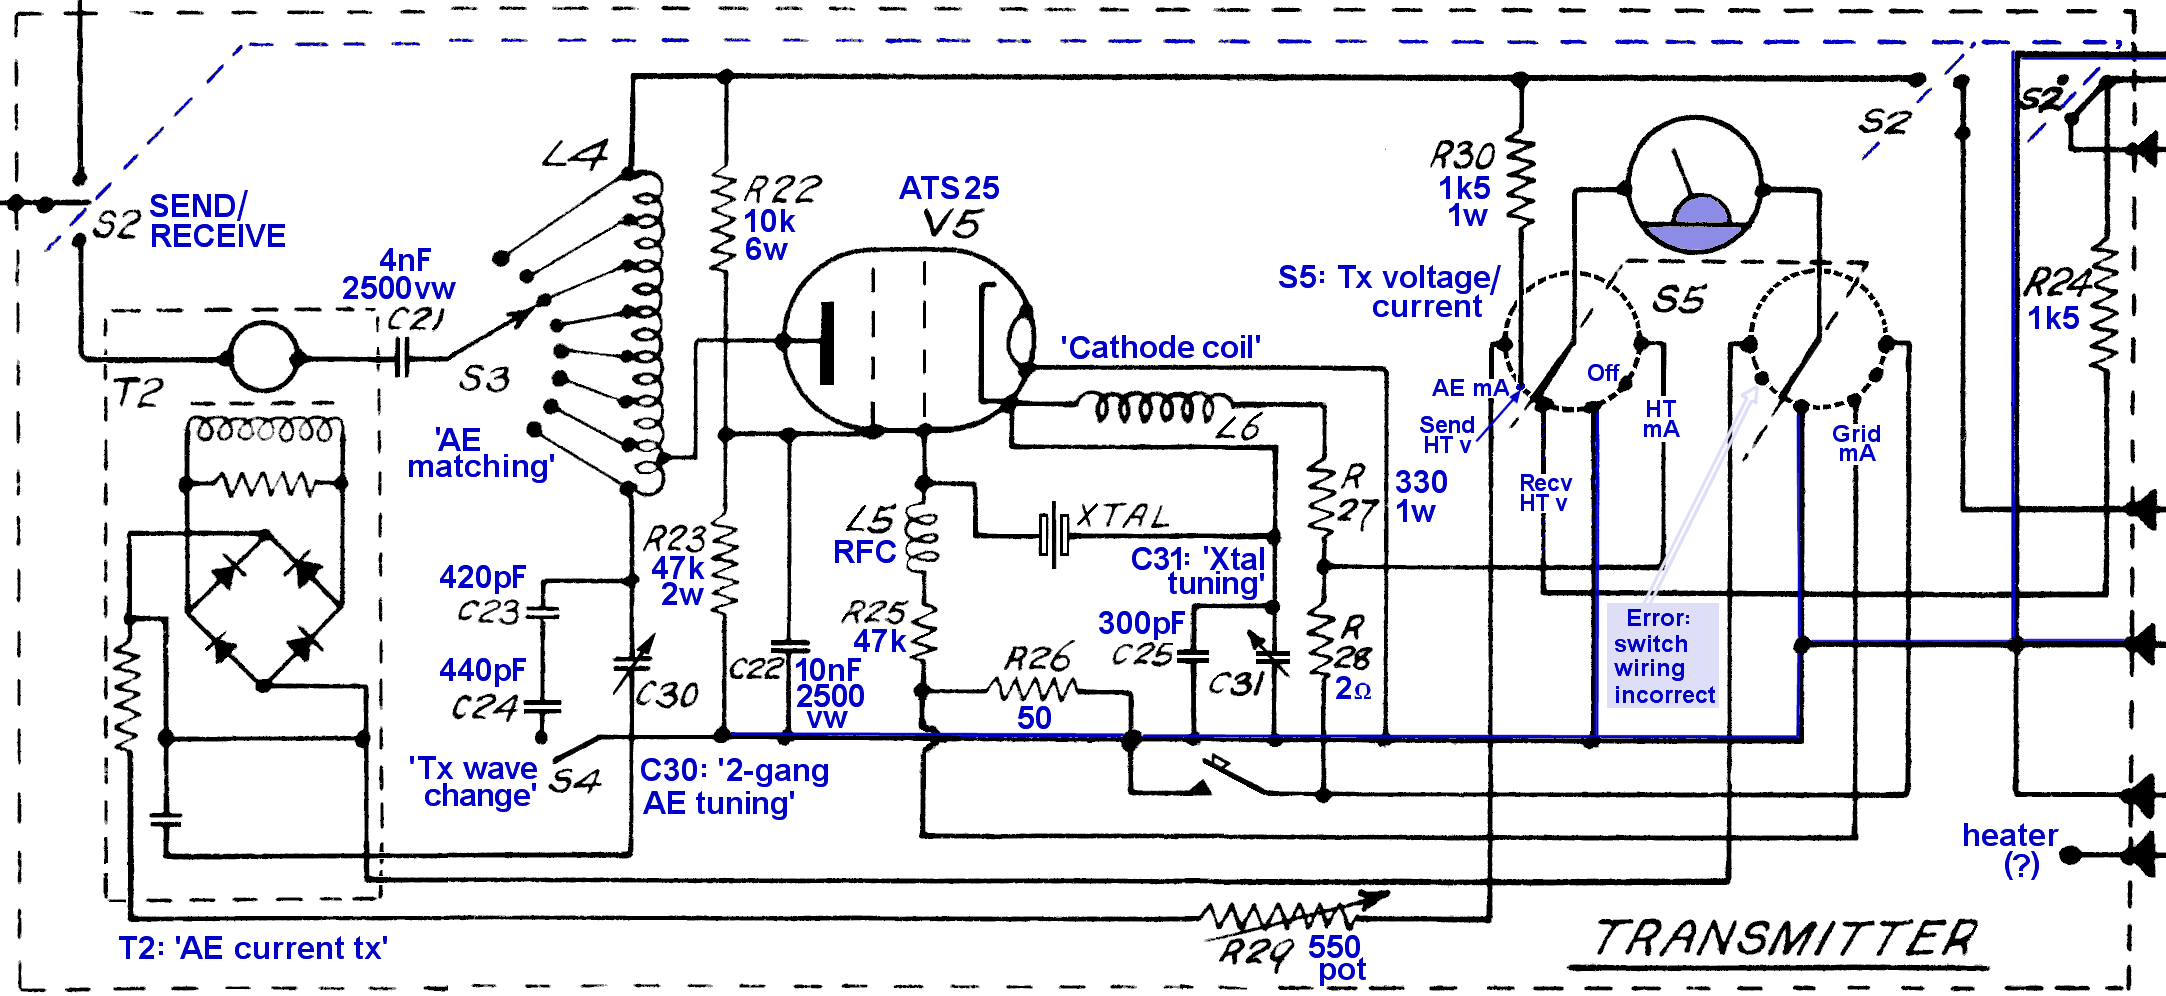 Wireless Set A transmitter circuit diagram